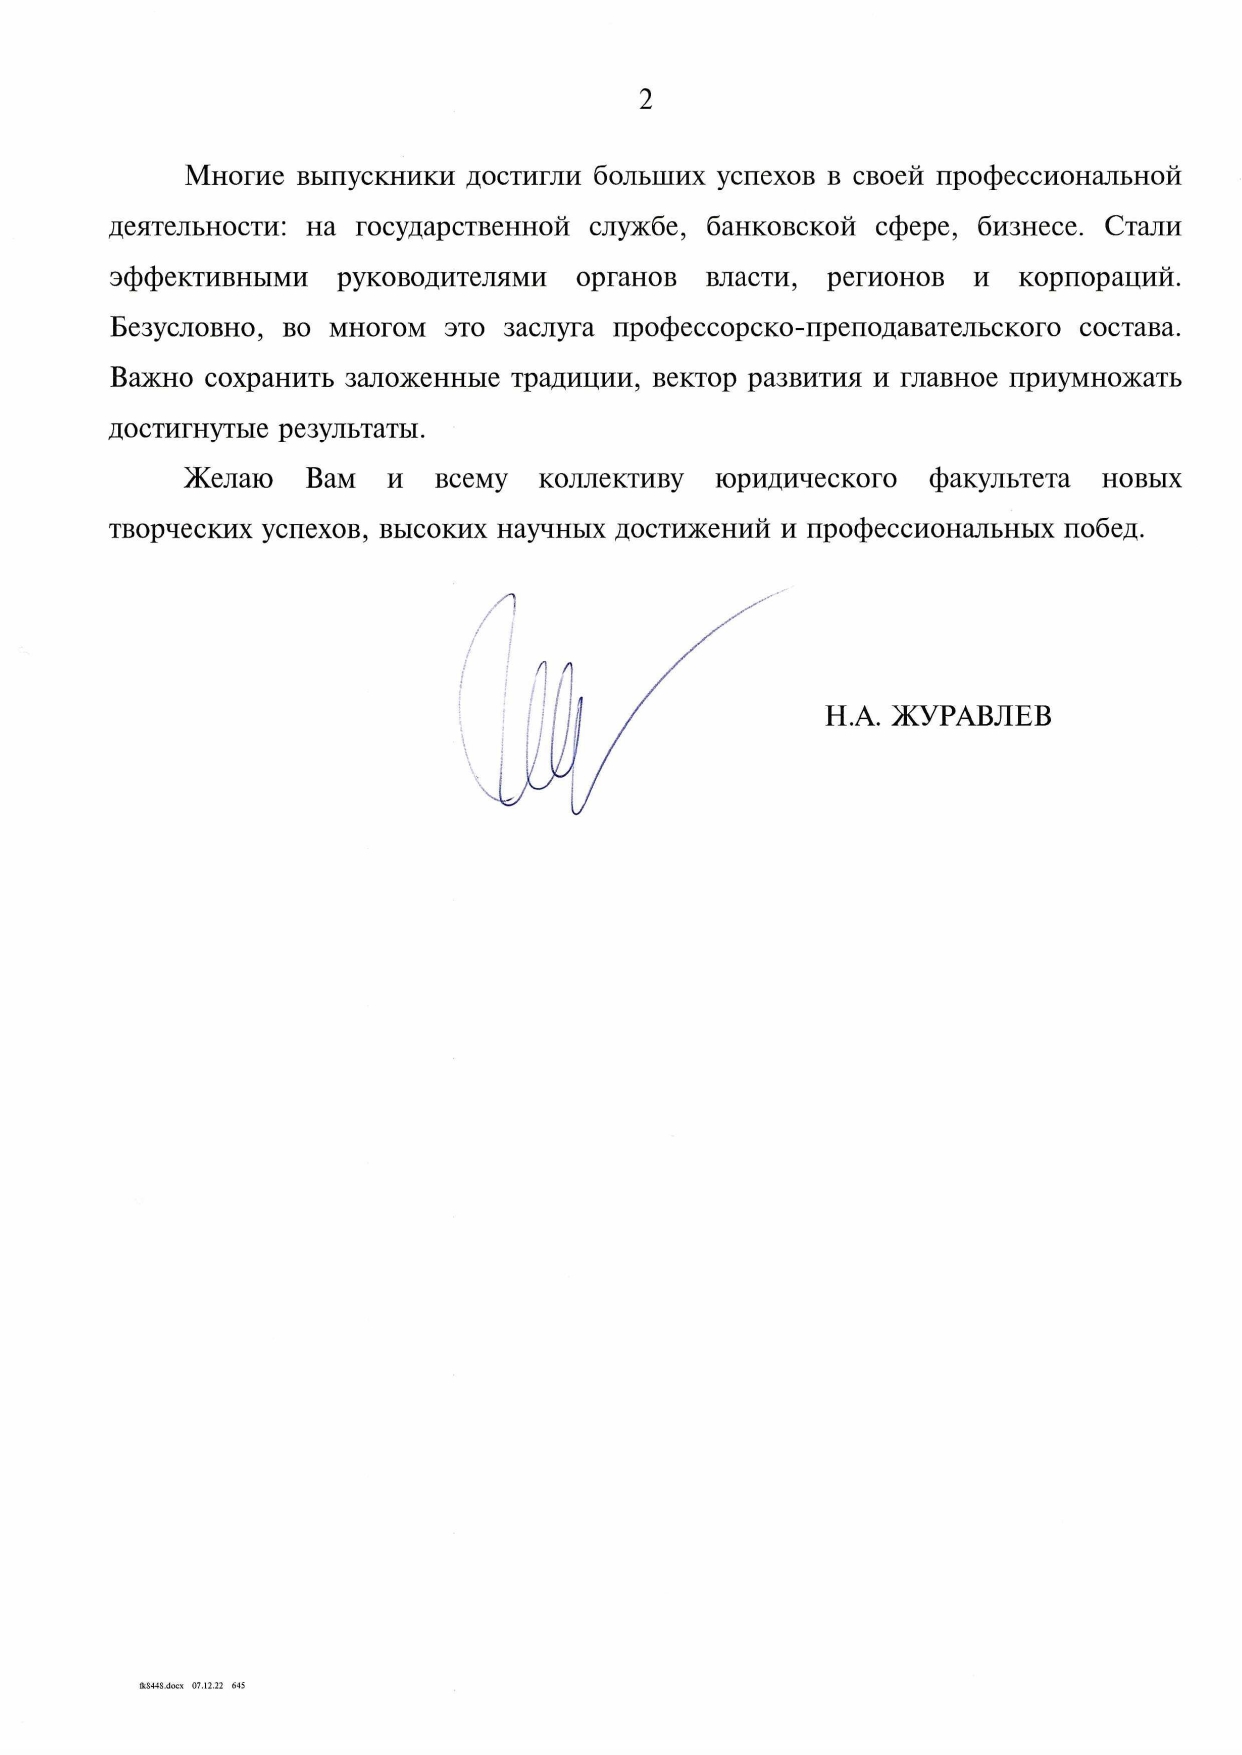 Поздравление Н.А. Журавлёва (1)_page-0002.jpg